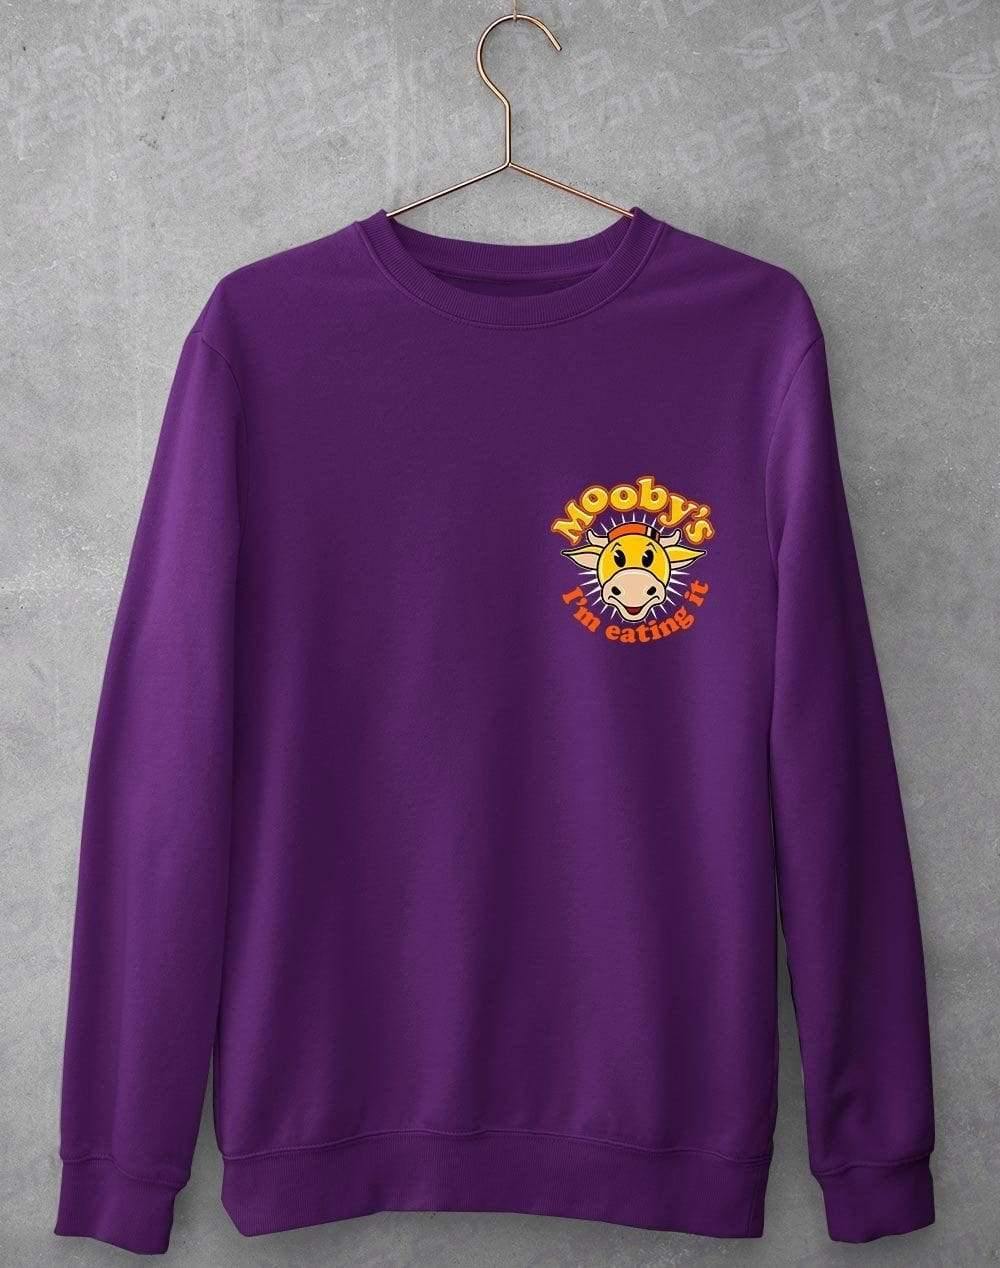 Moobys Sweatshirt S / Purple  - Off World Tees